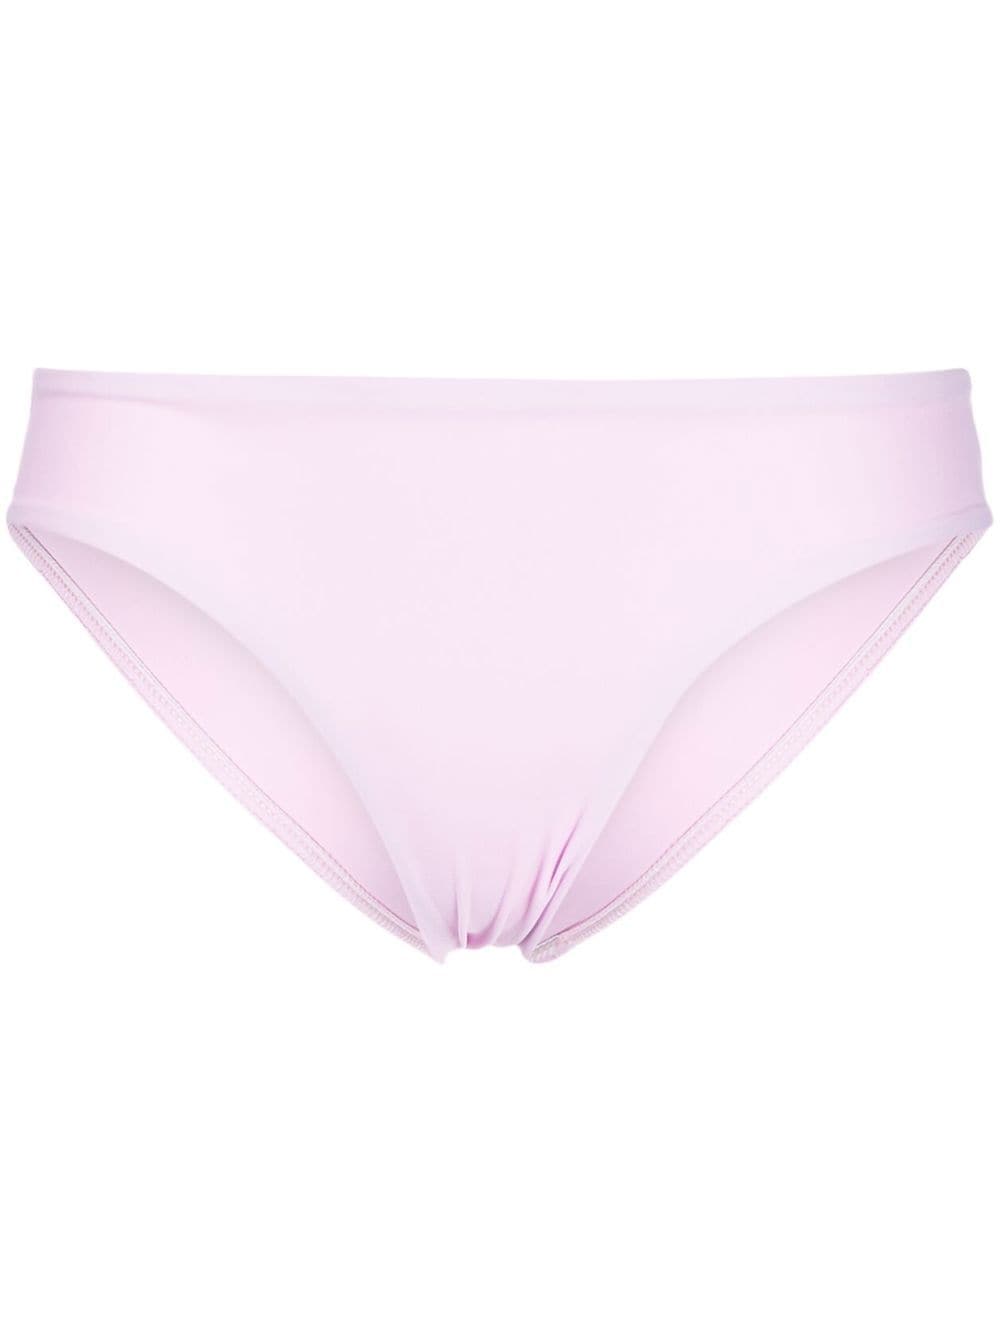 BONDI BORN Nadia bikini bottoms - Pink von BONDI BORN